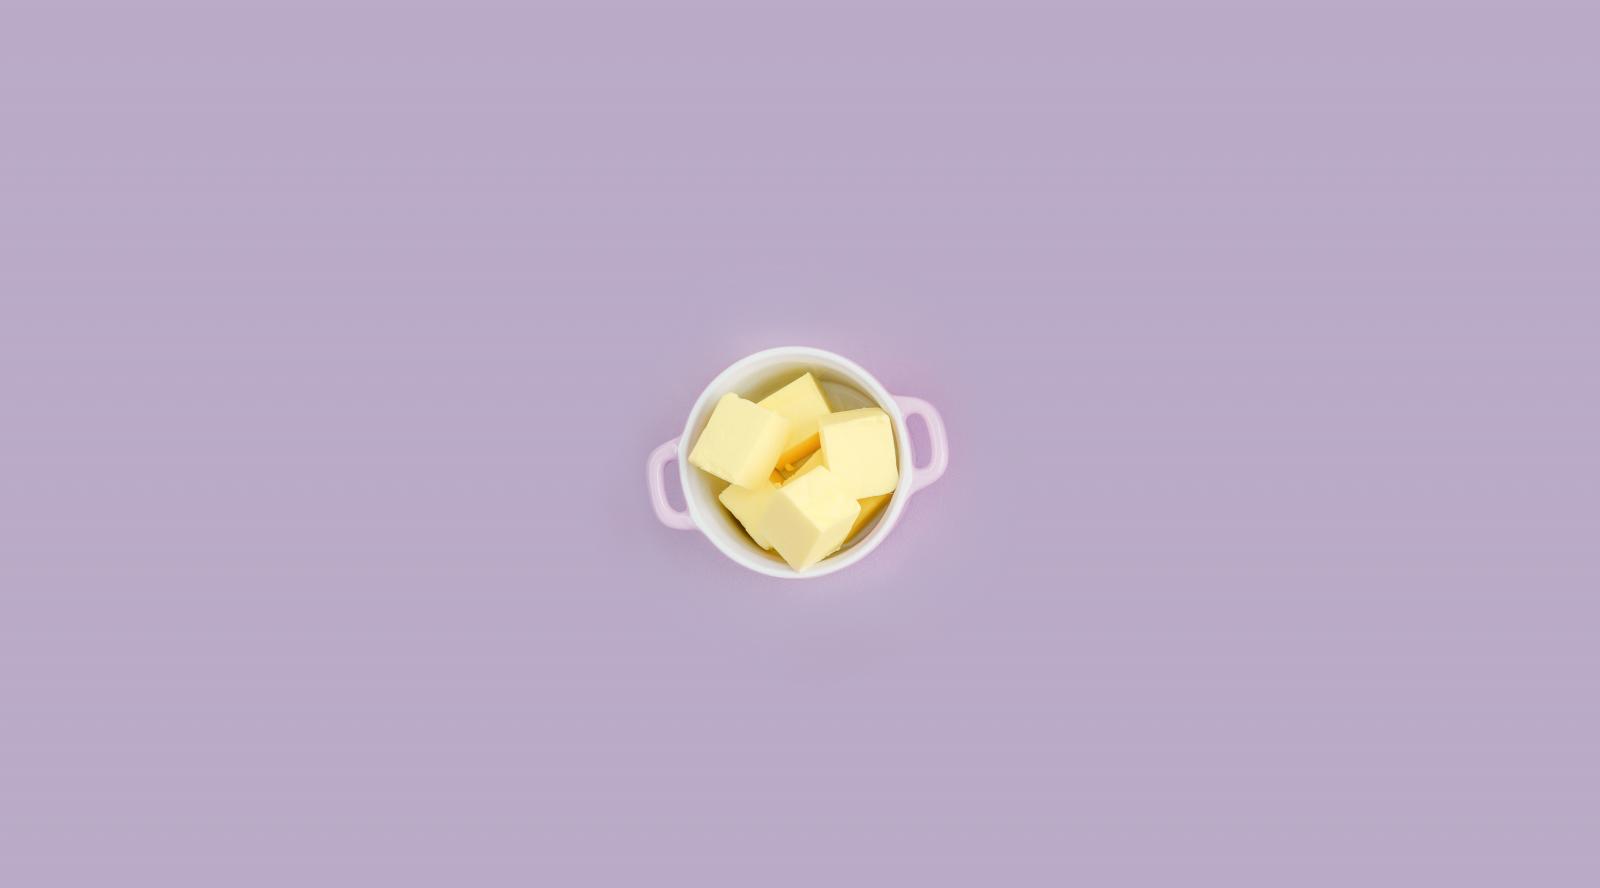 glanbia ireland ingredients butter in bowl on purple background